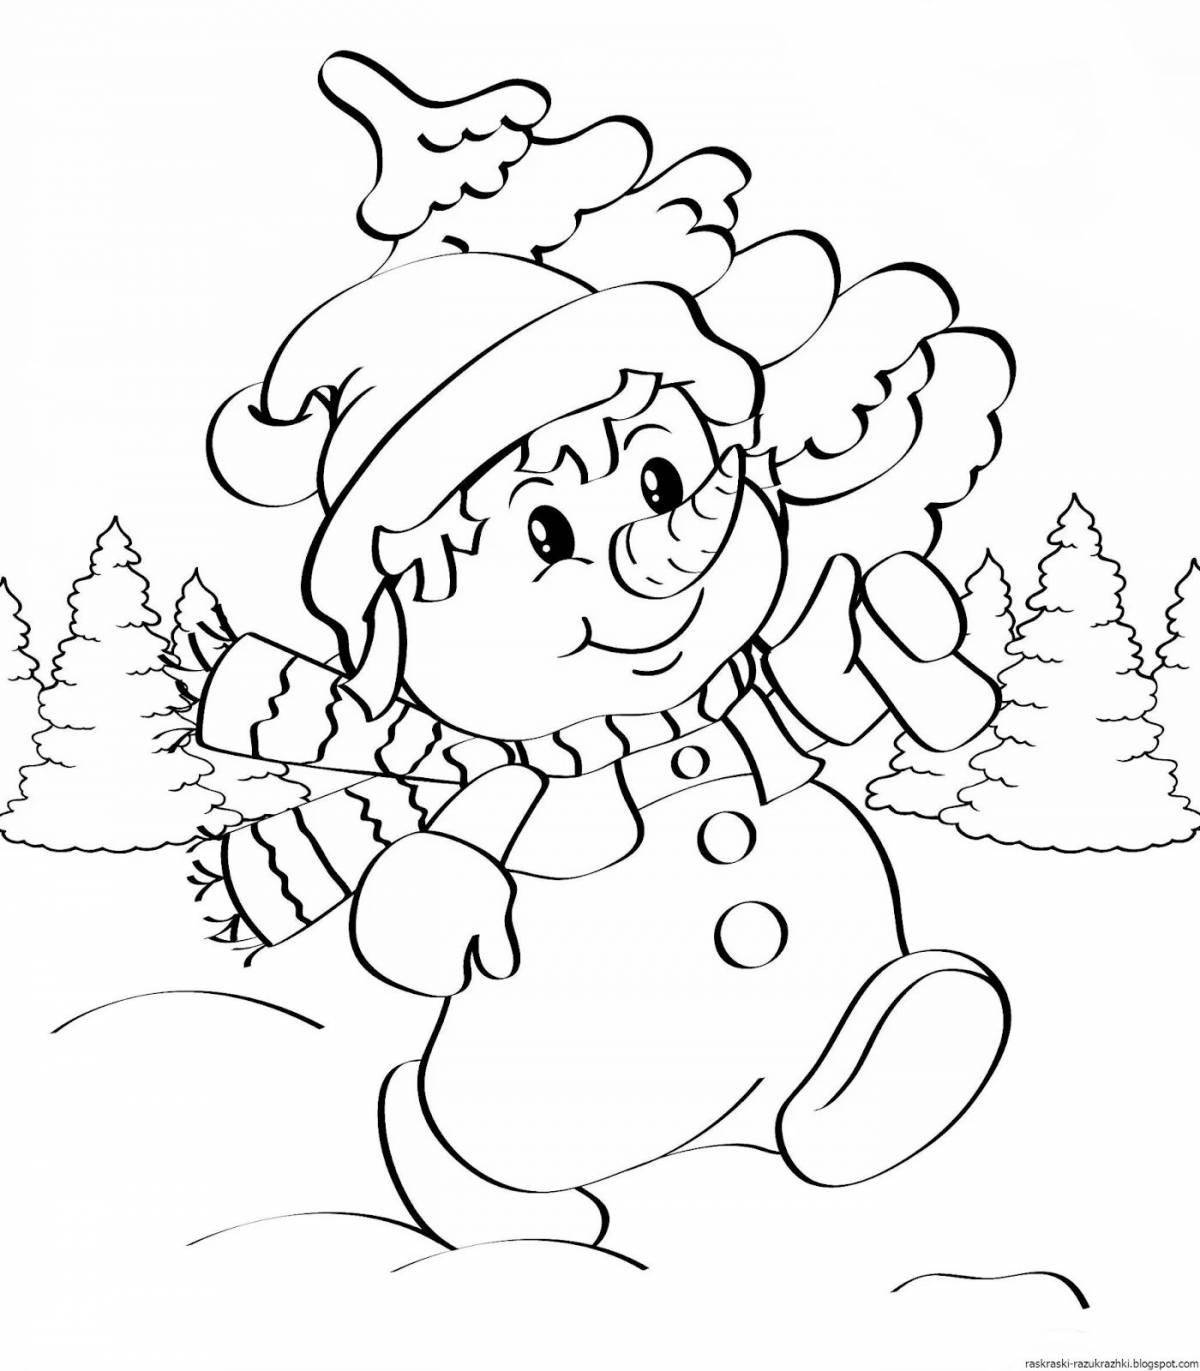 Joyful children's christmas coloring book